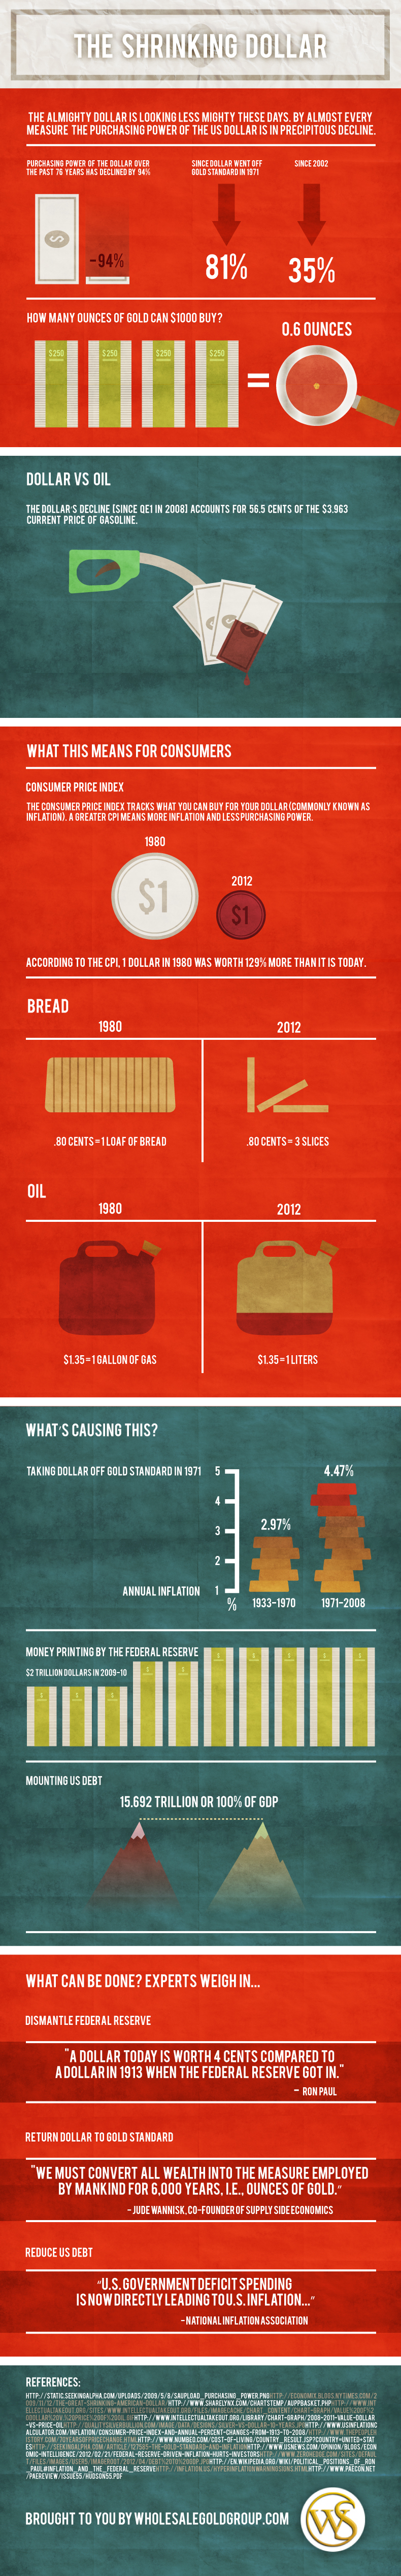 "The Shrinking Dollar" infographic